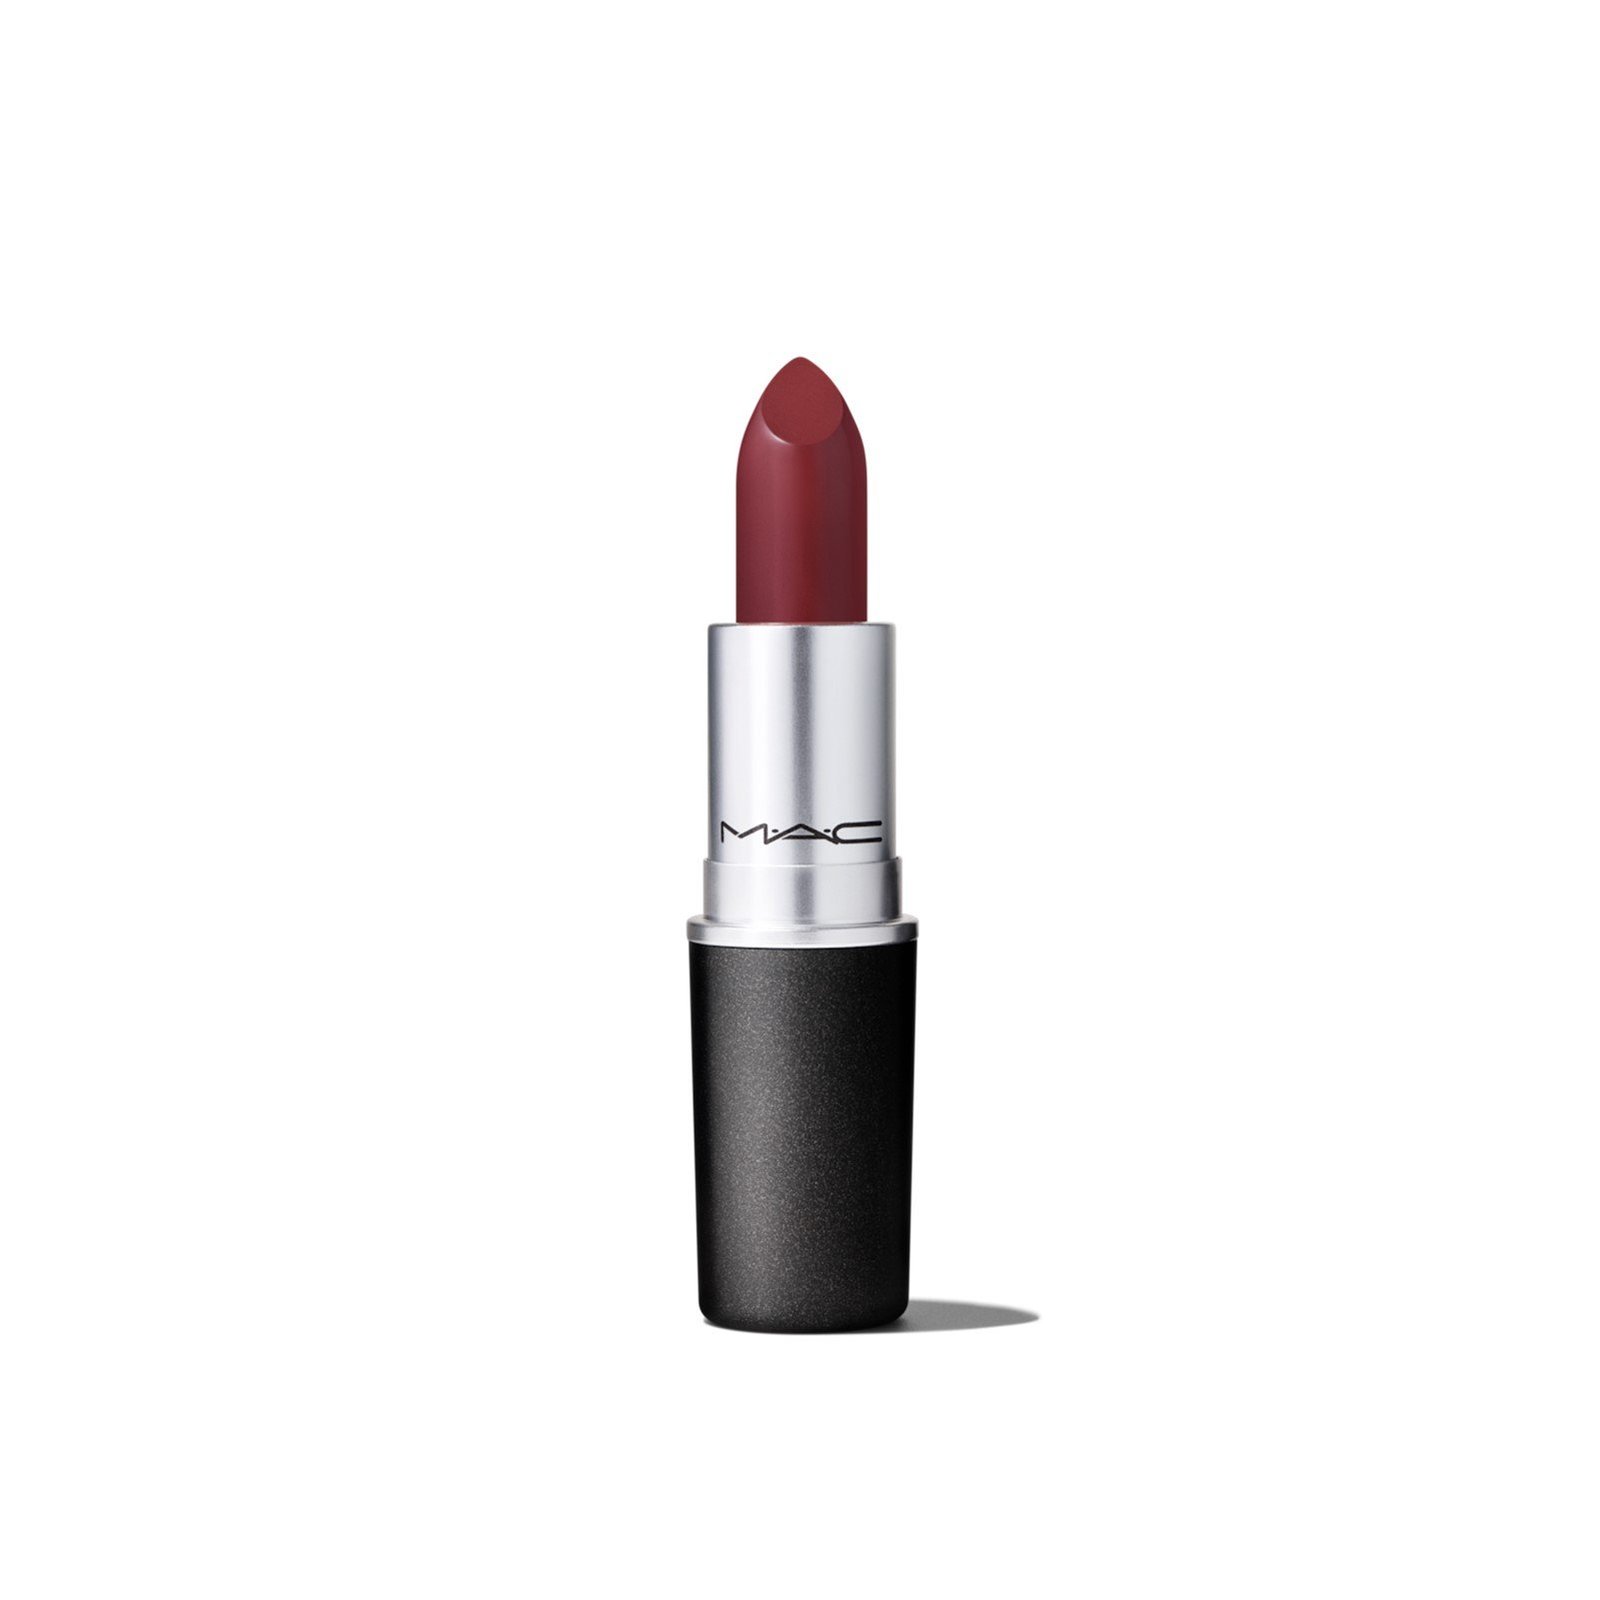 M.A.C Cosmetics Matte Lipstick 613 Sin 3g (0.10 oz)